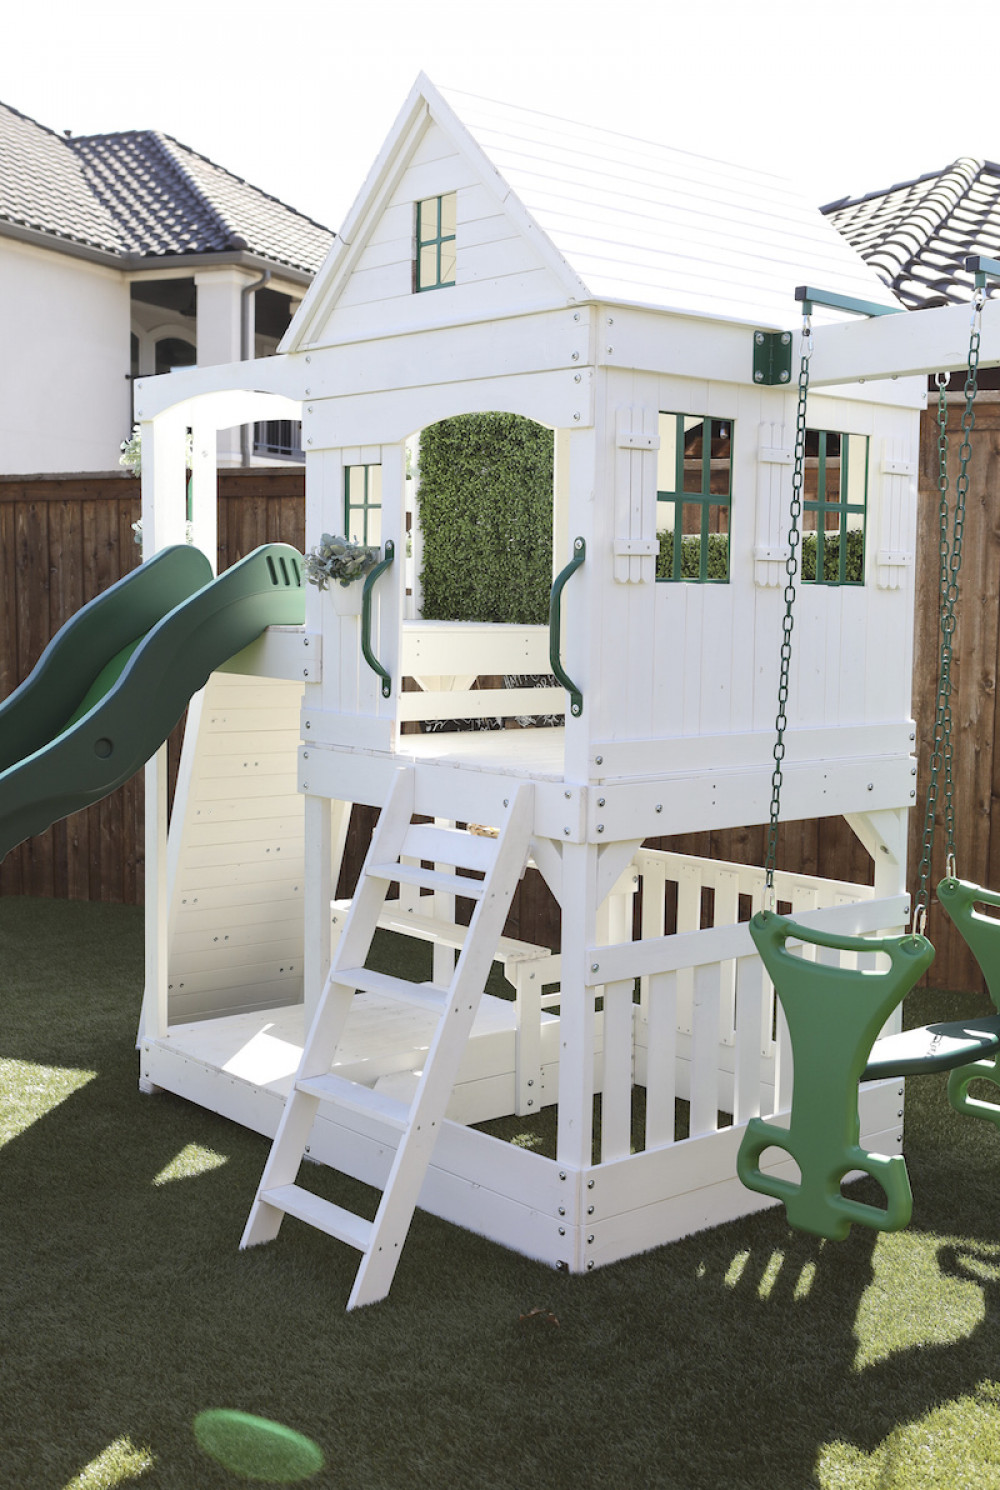 beyond-interior-design-kids-backyard-swingset-playhouse